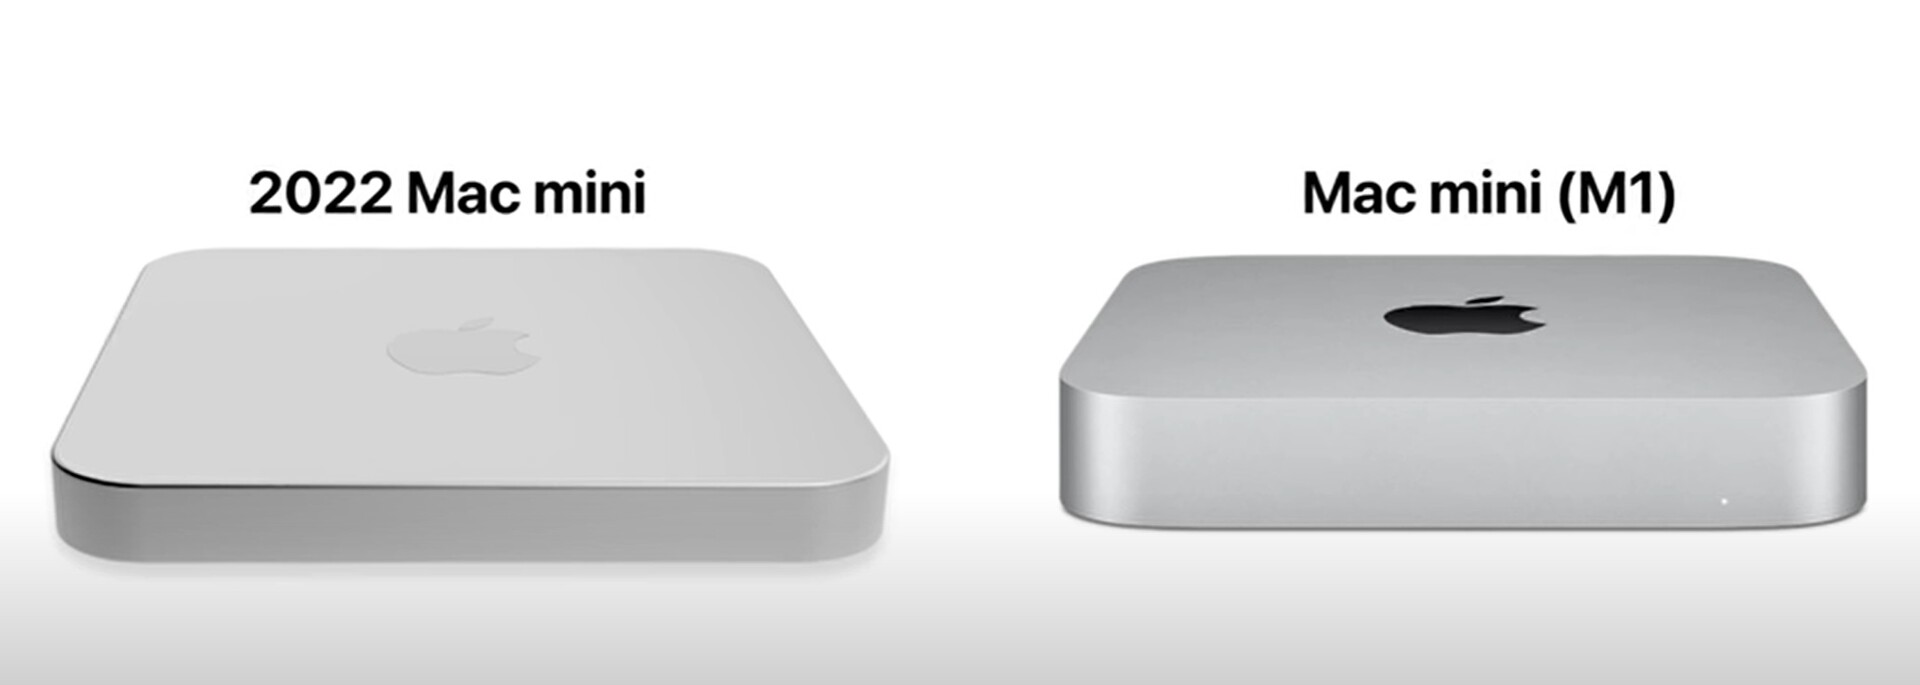 apple mac mini 2012 specifications